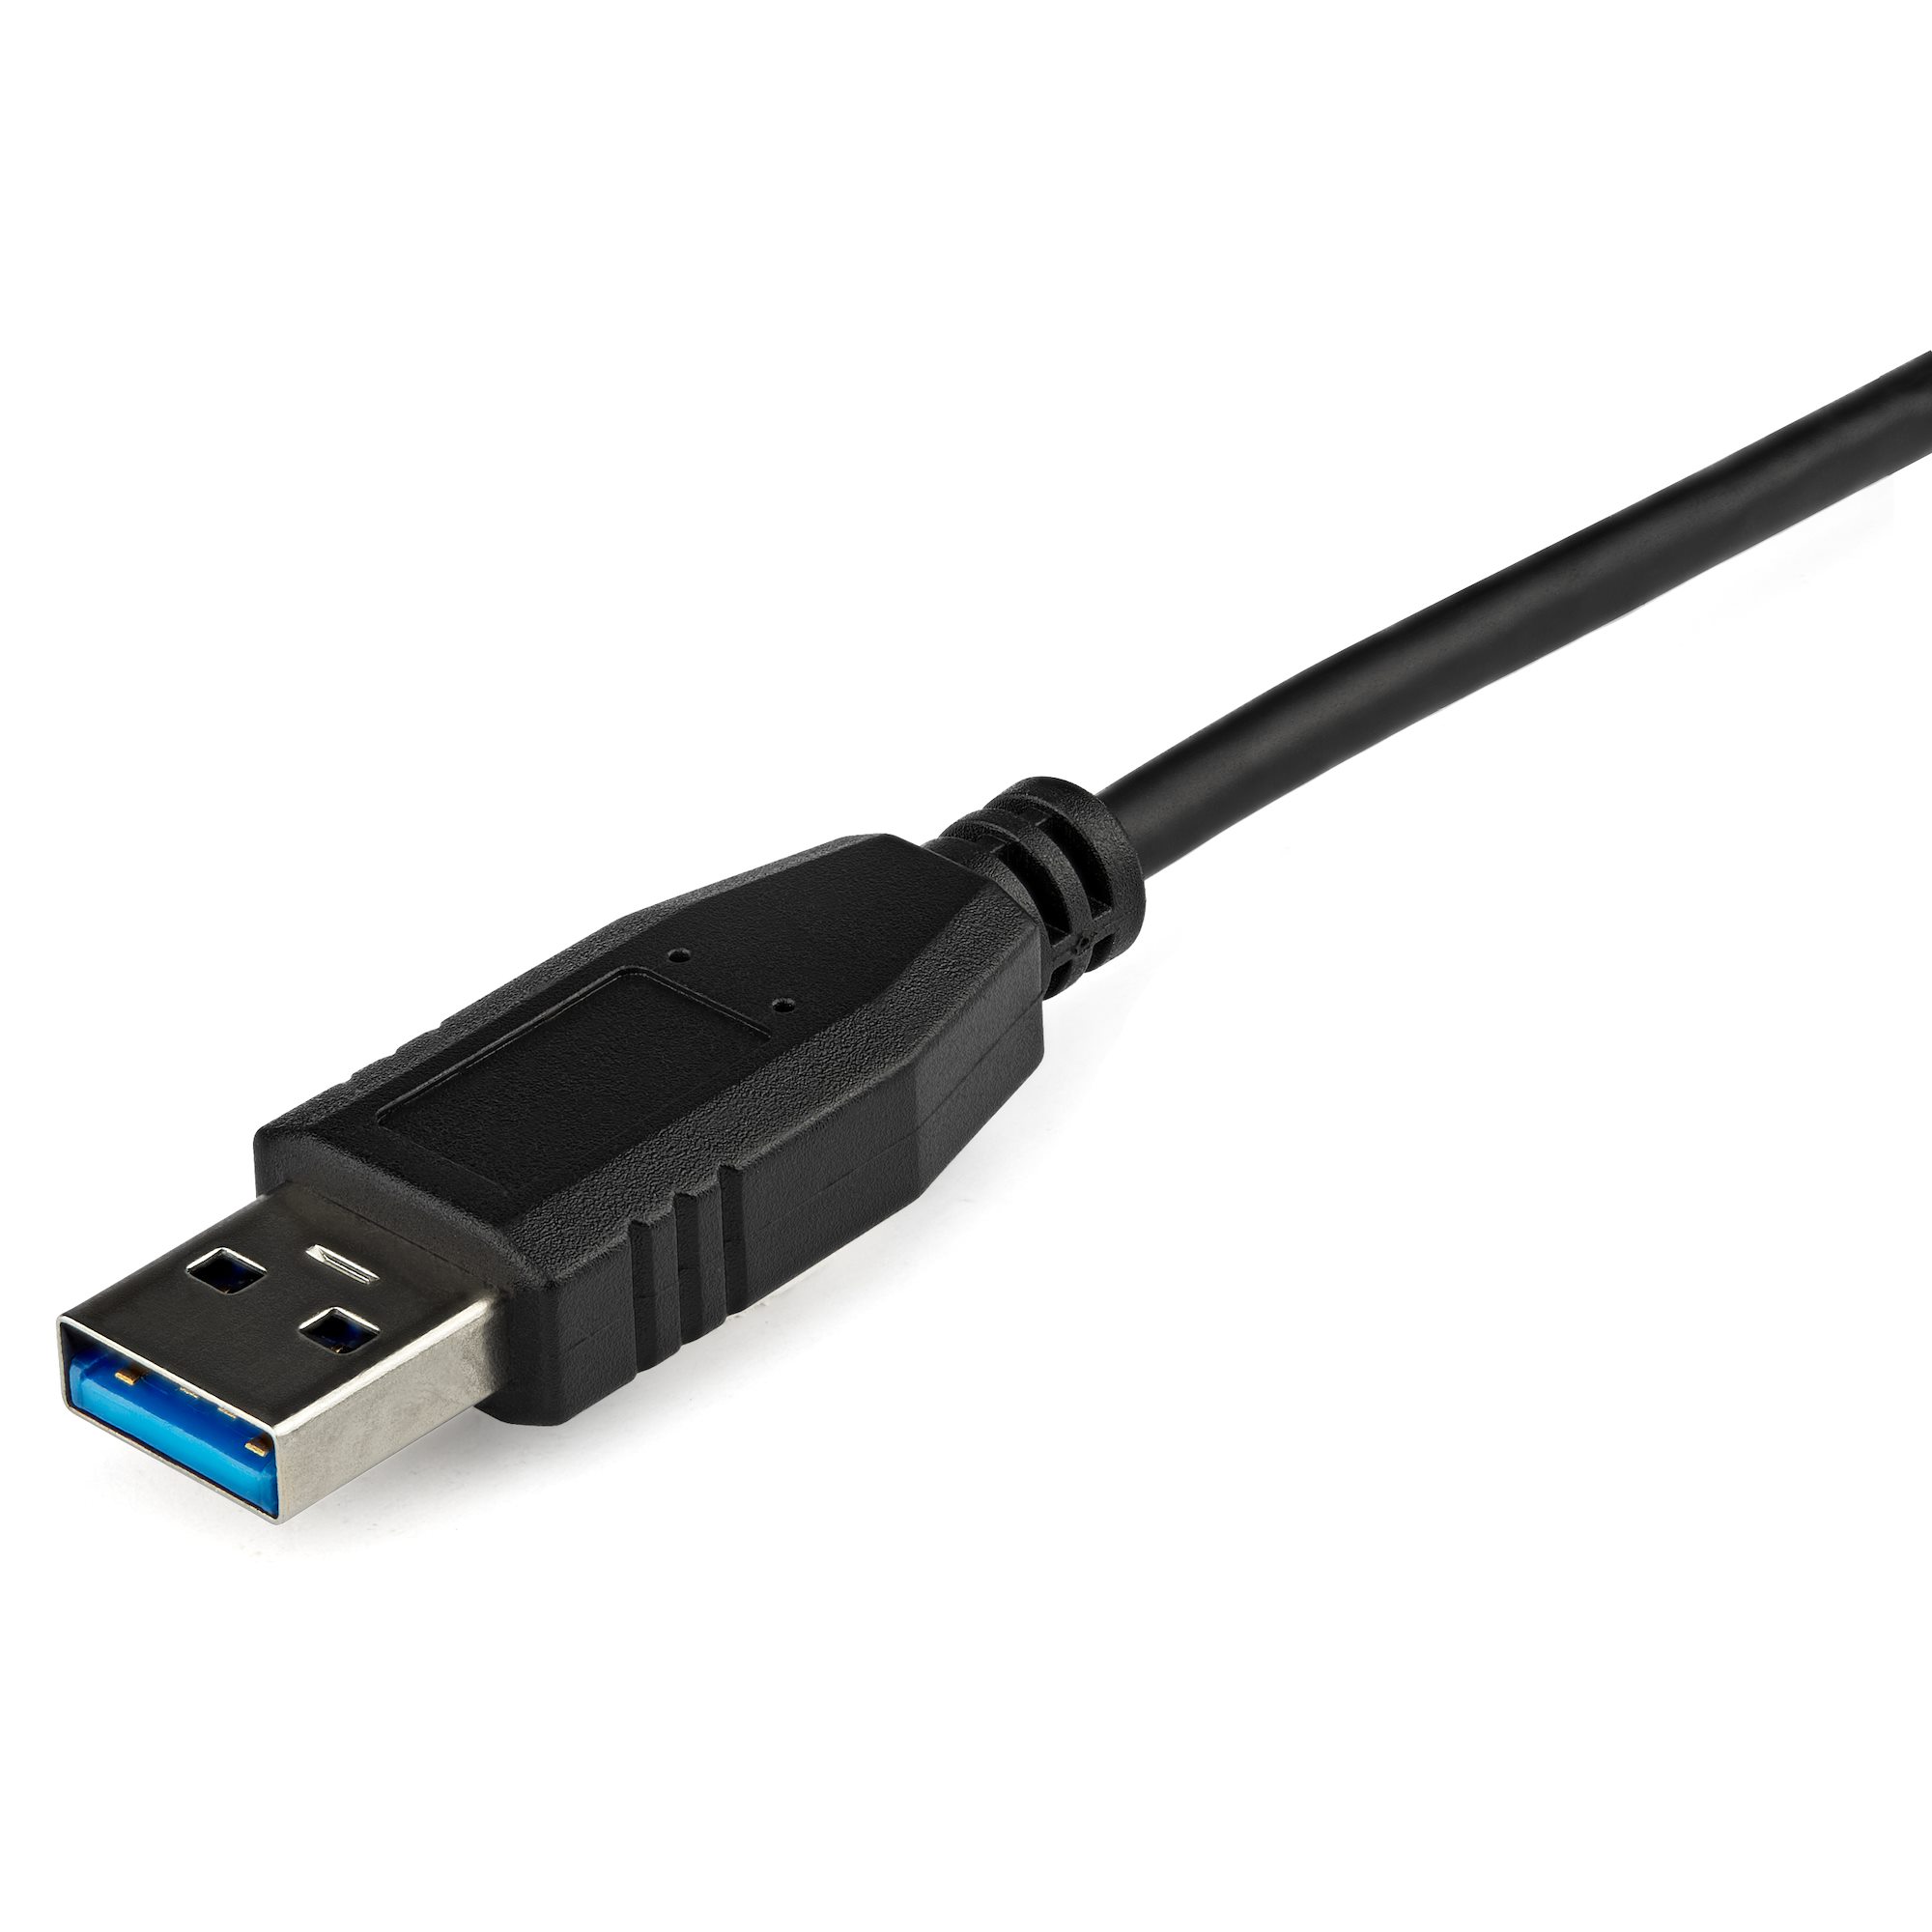 STARTECH.COM USB31000SPTB USB 3.0 GIGABIT ETHERNET ADAPTER WITH USB PORT BLACK 